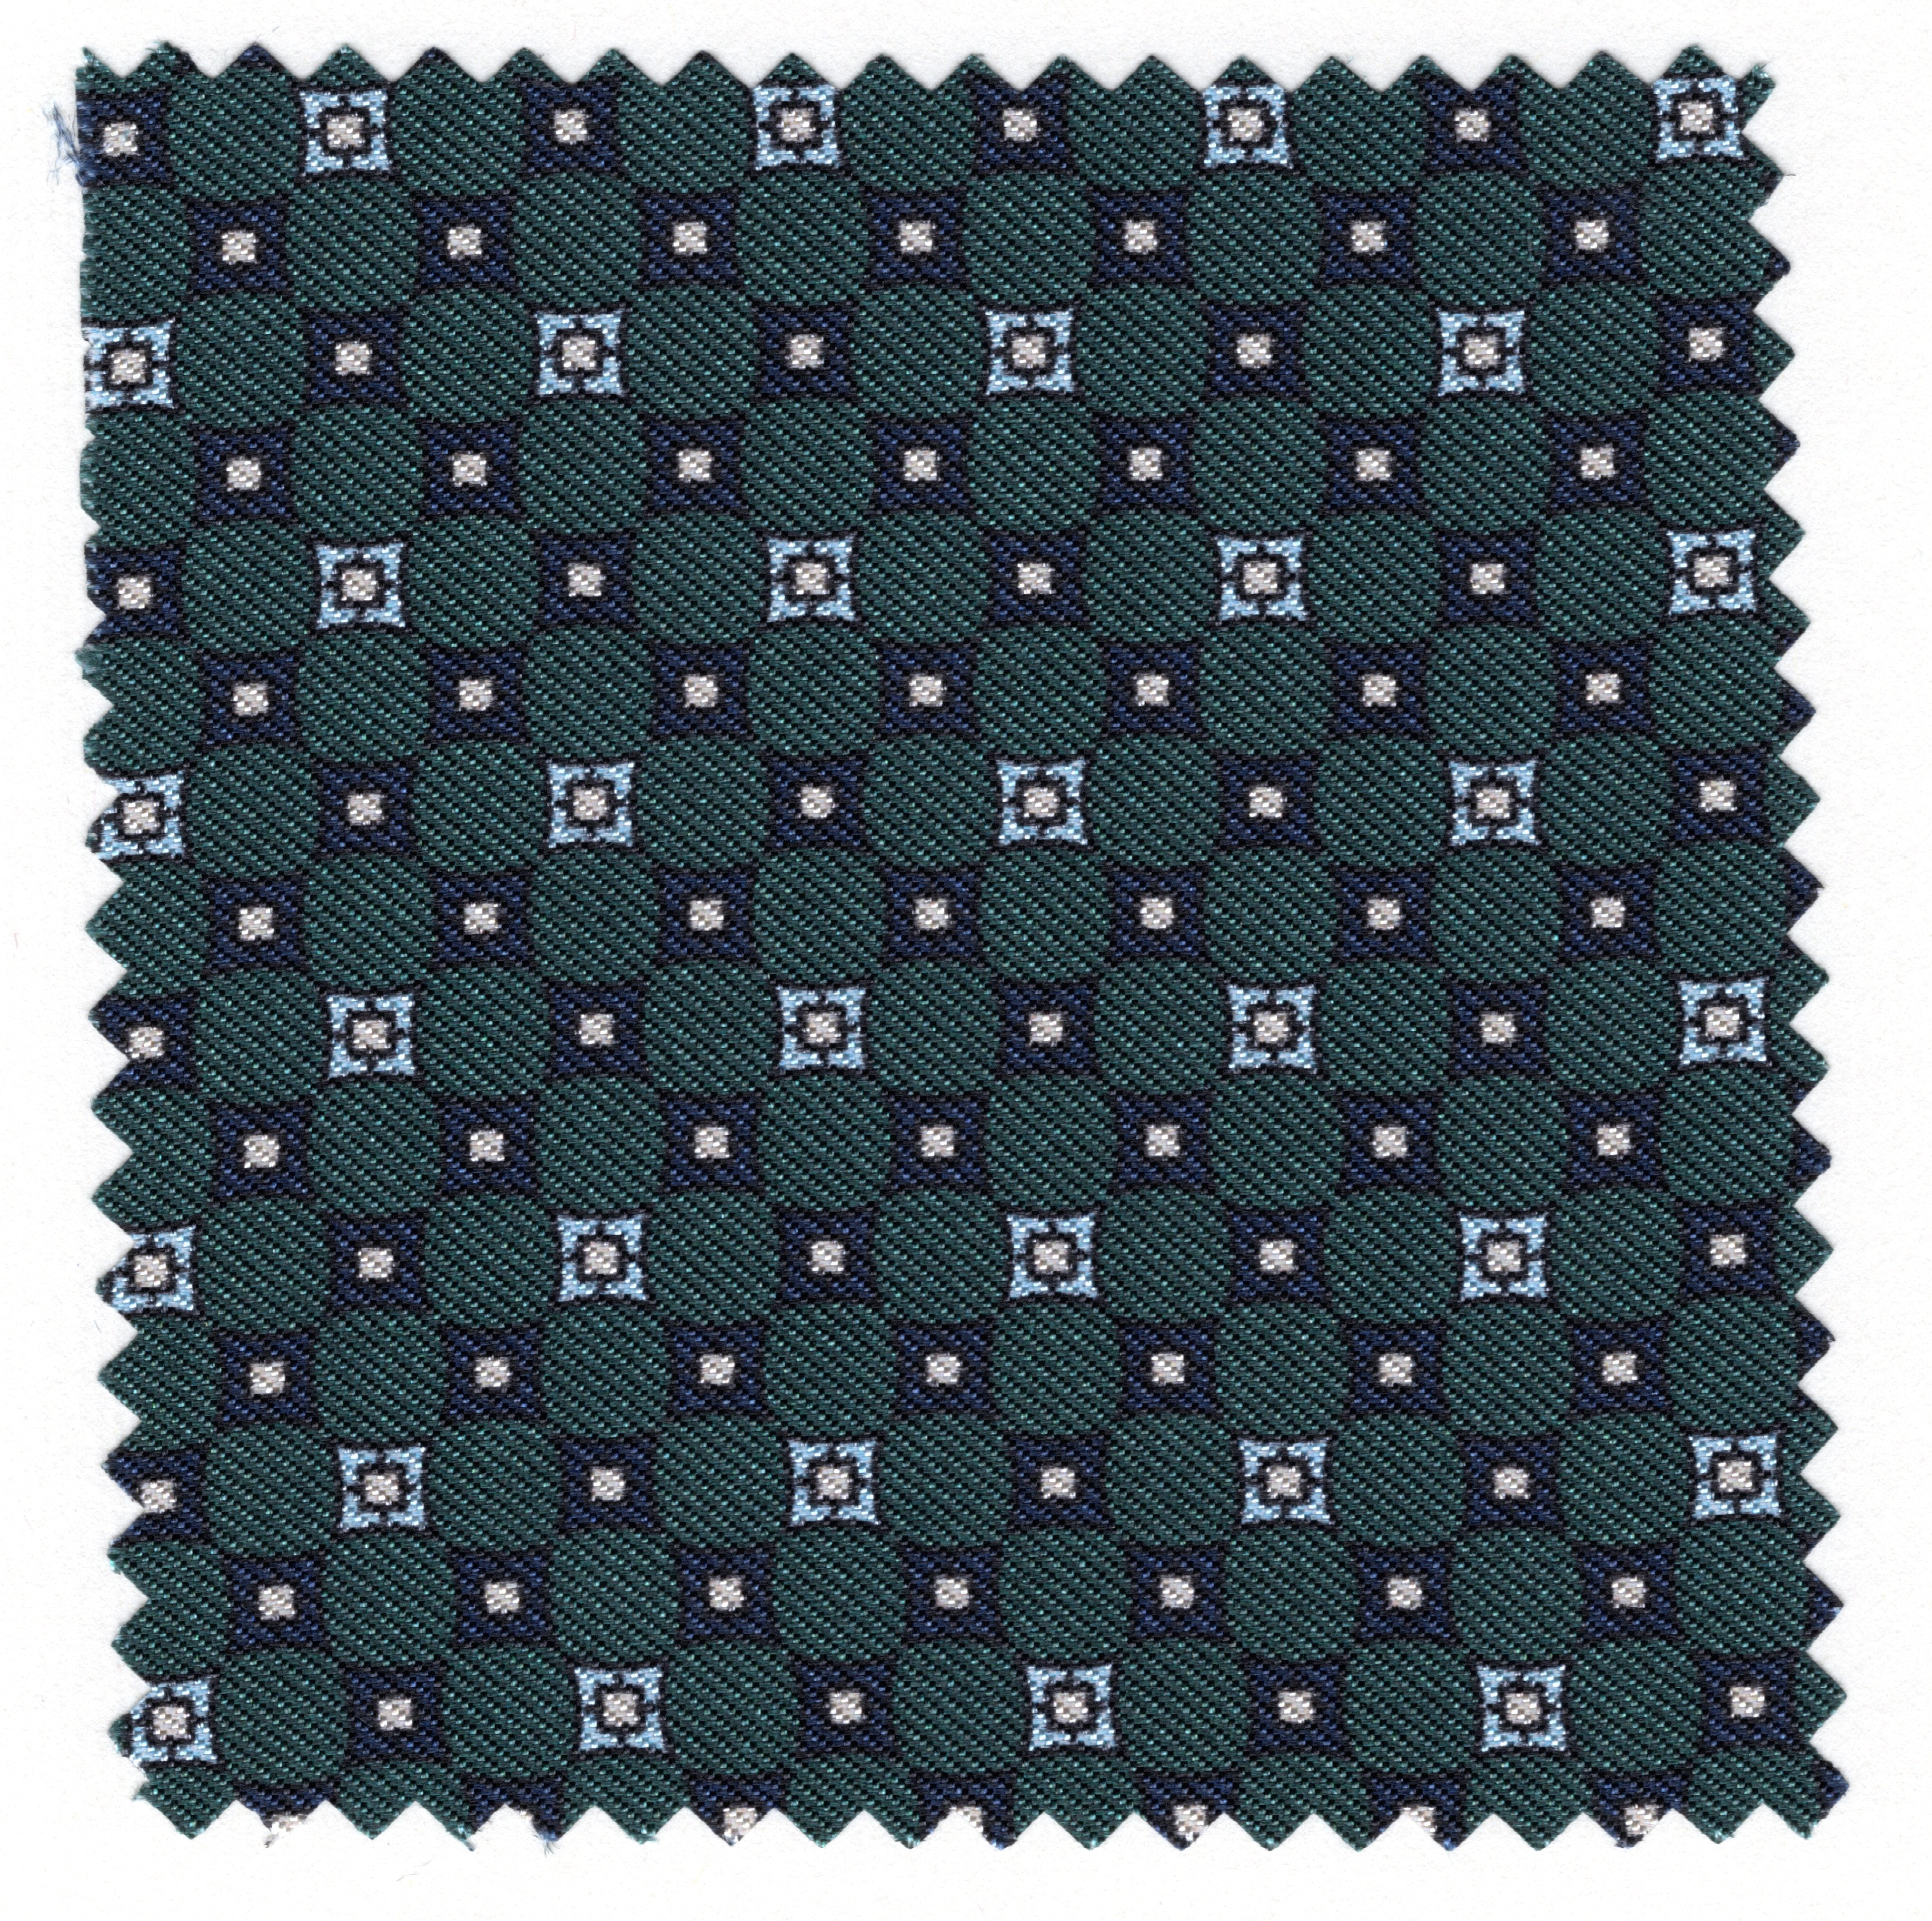 Tie seven bespoke folds - microfantasy 9549-5